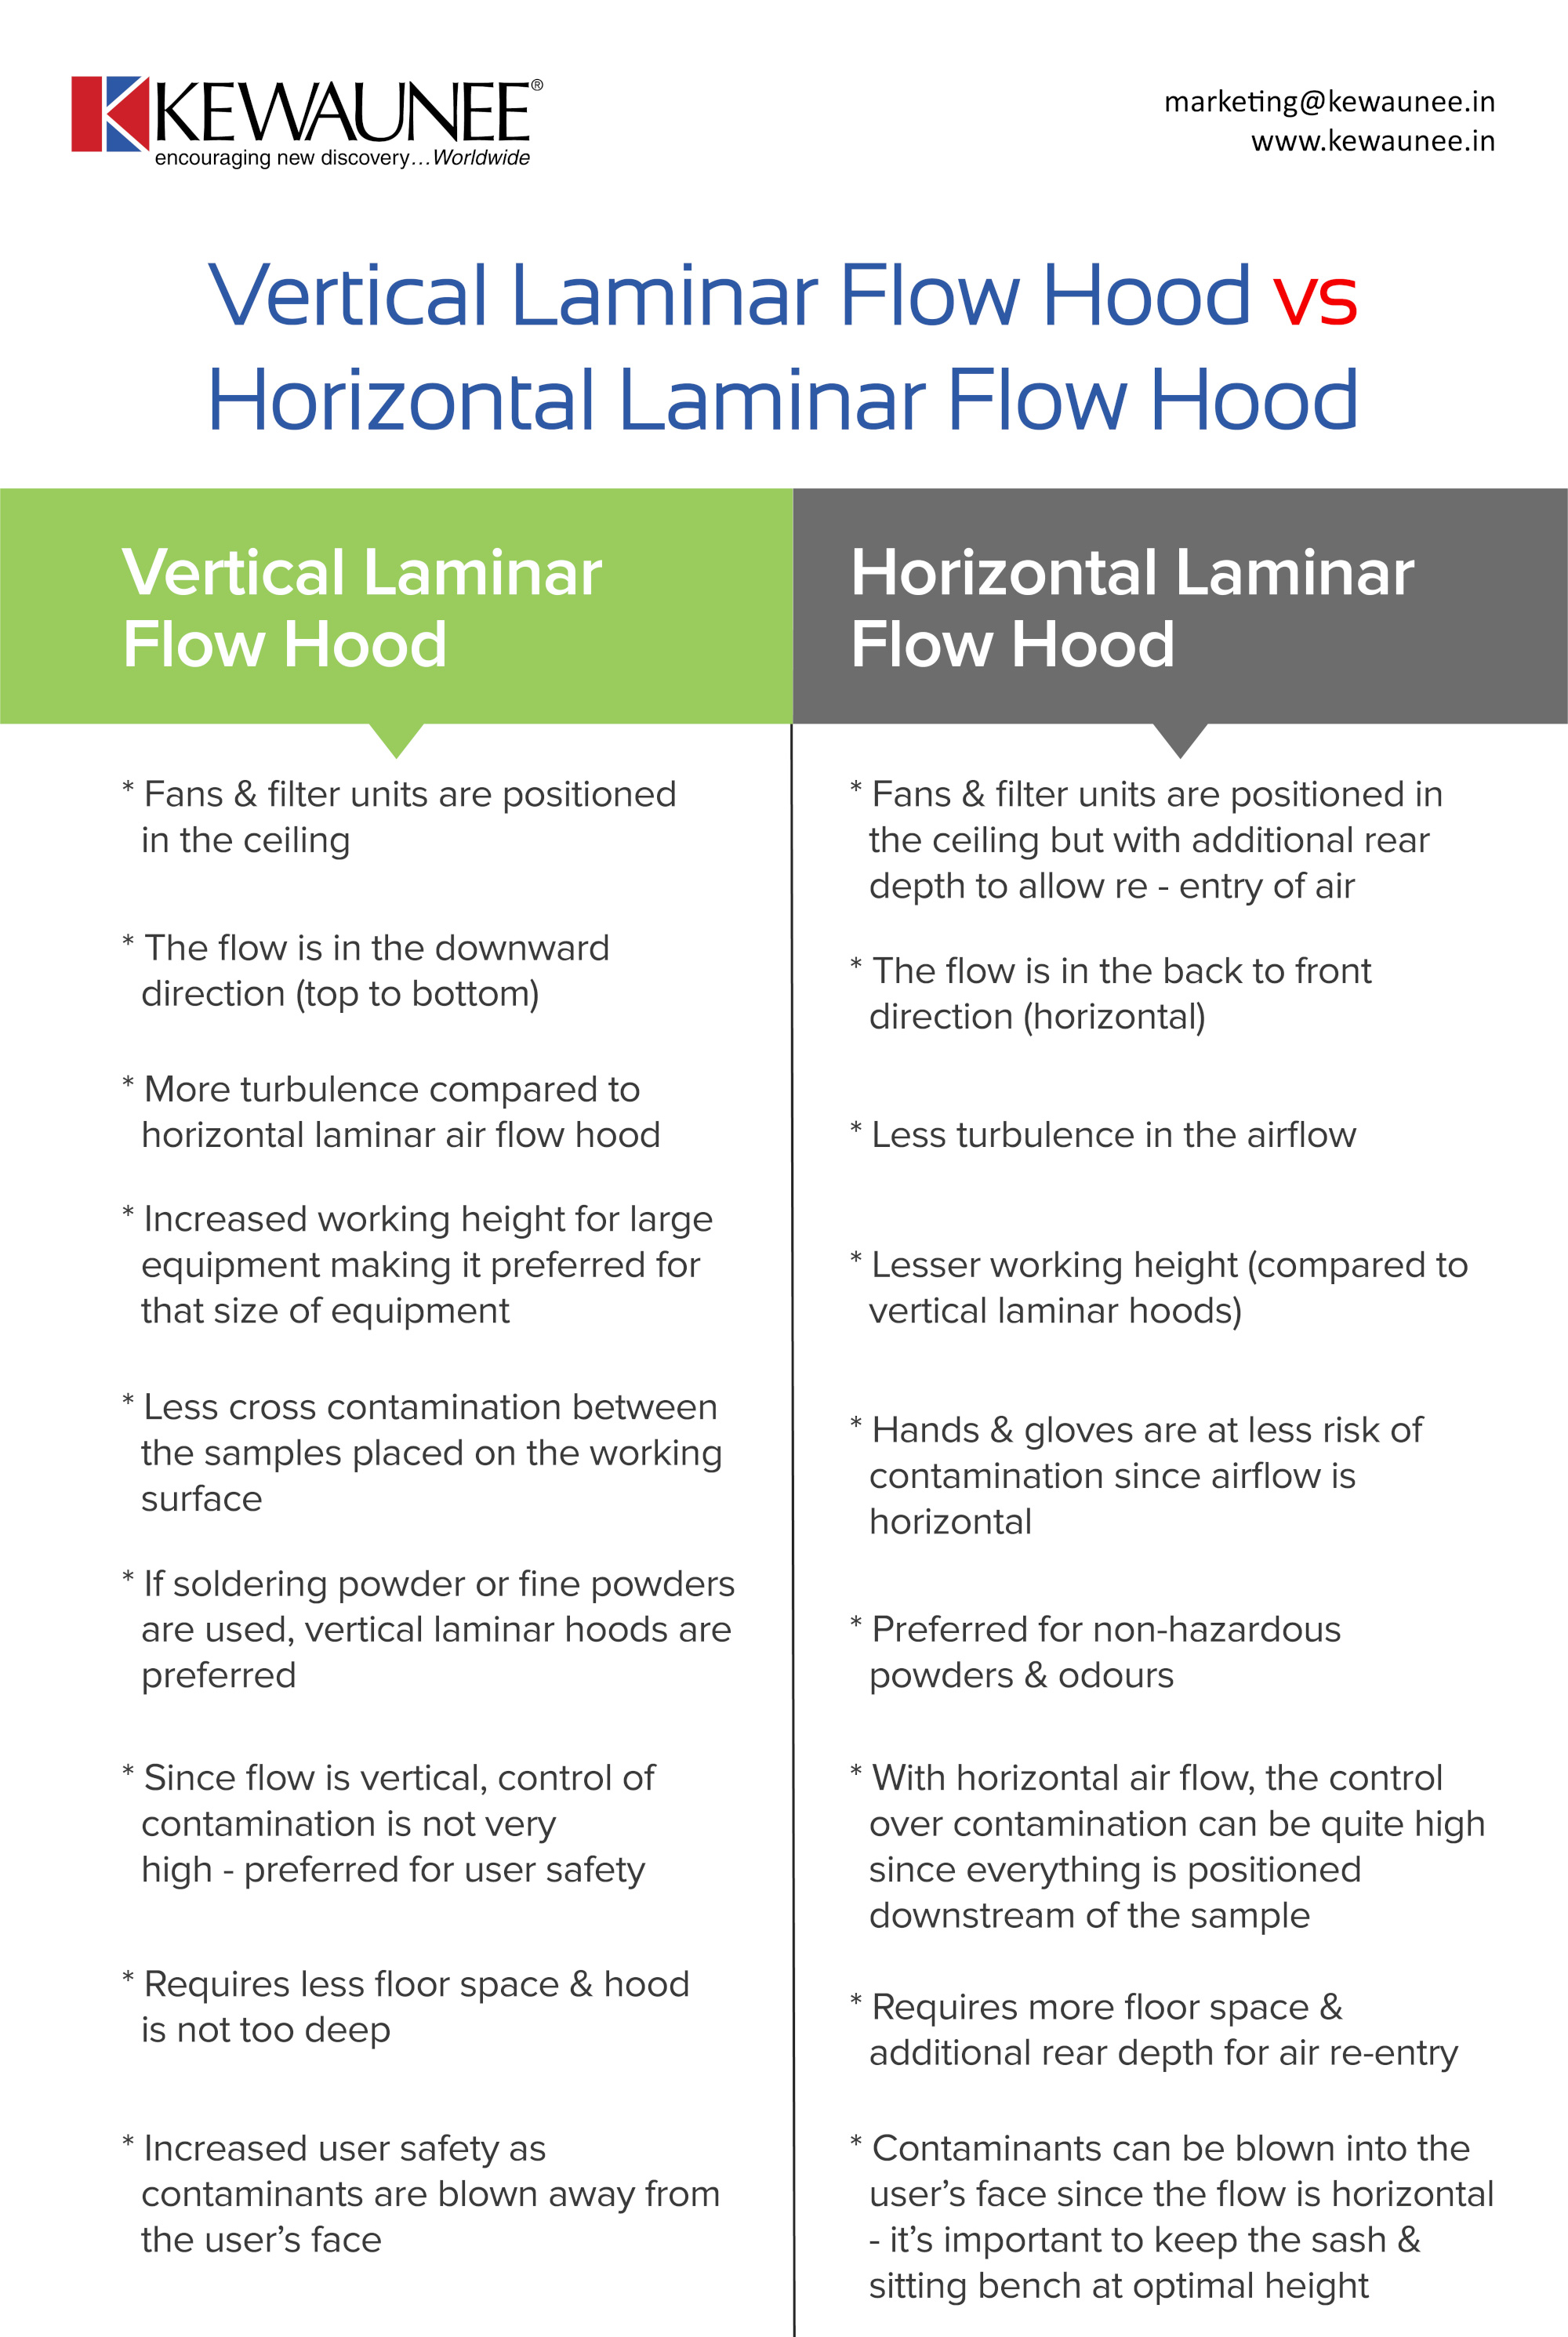 Vertical Laminar Flow Hood vs Horizontal Laminar Flow Hood